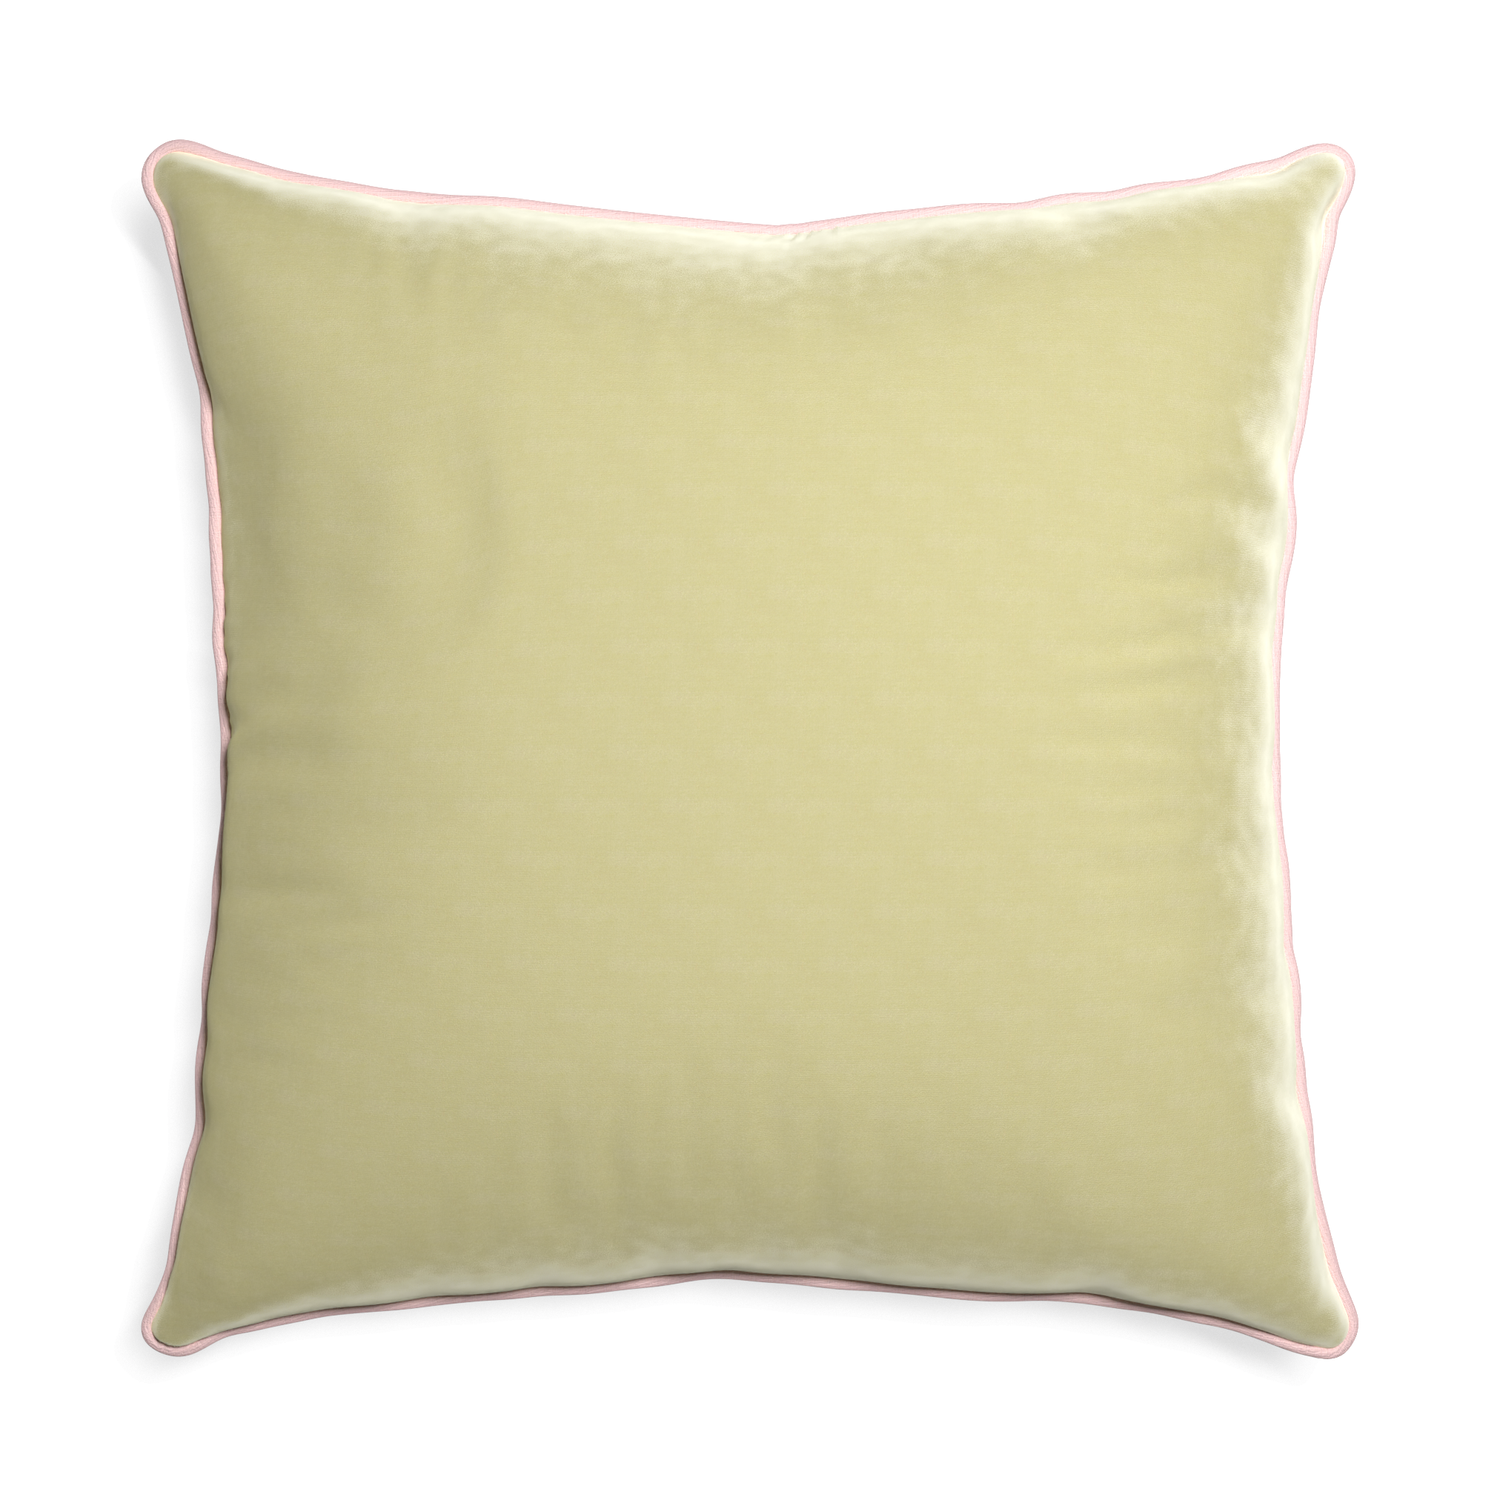 square light green velvet pillow with light pink piping